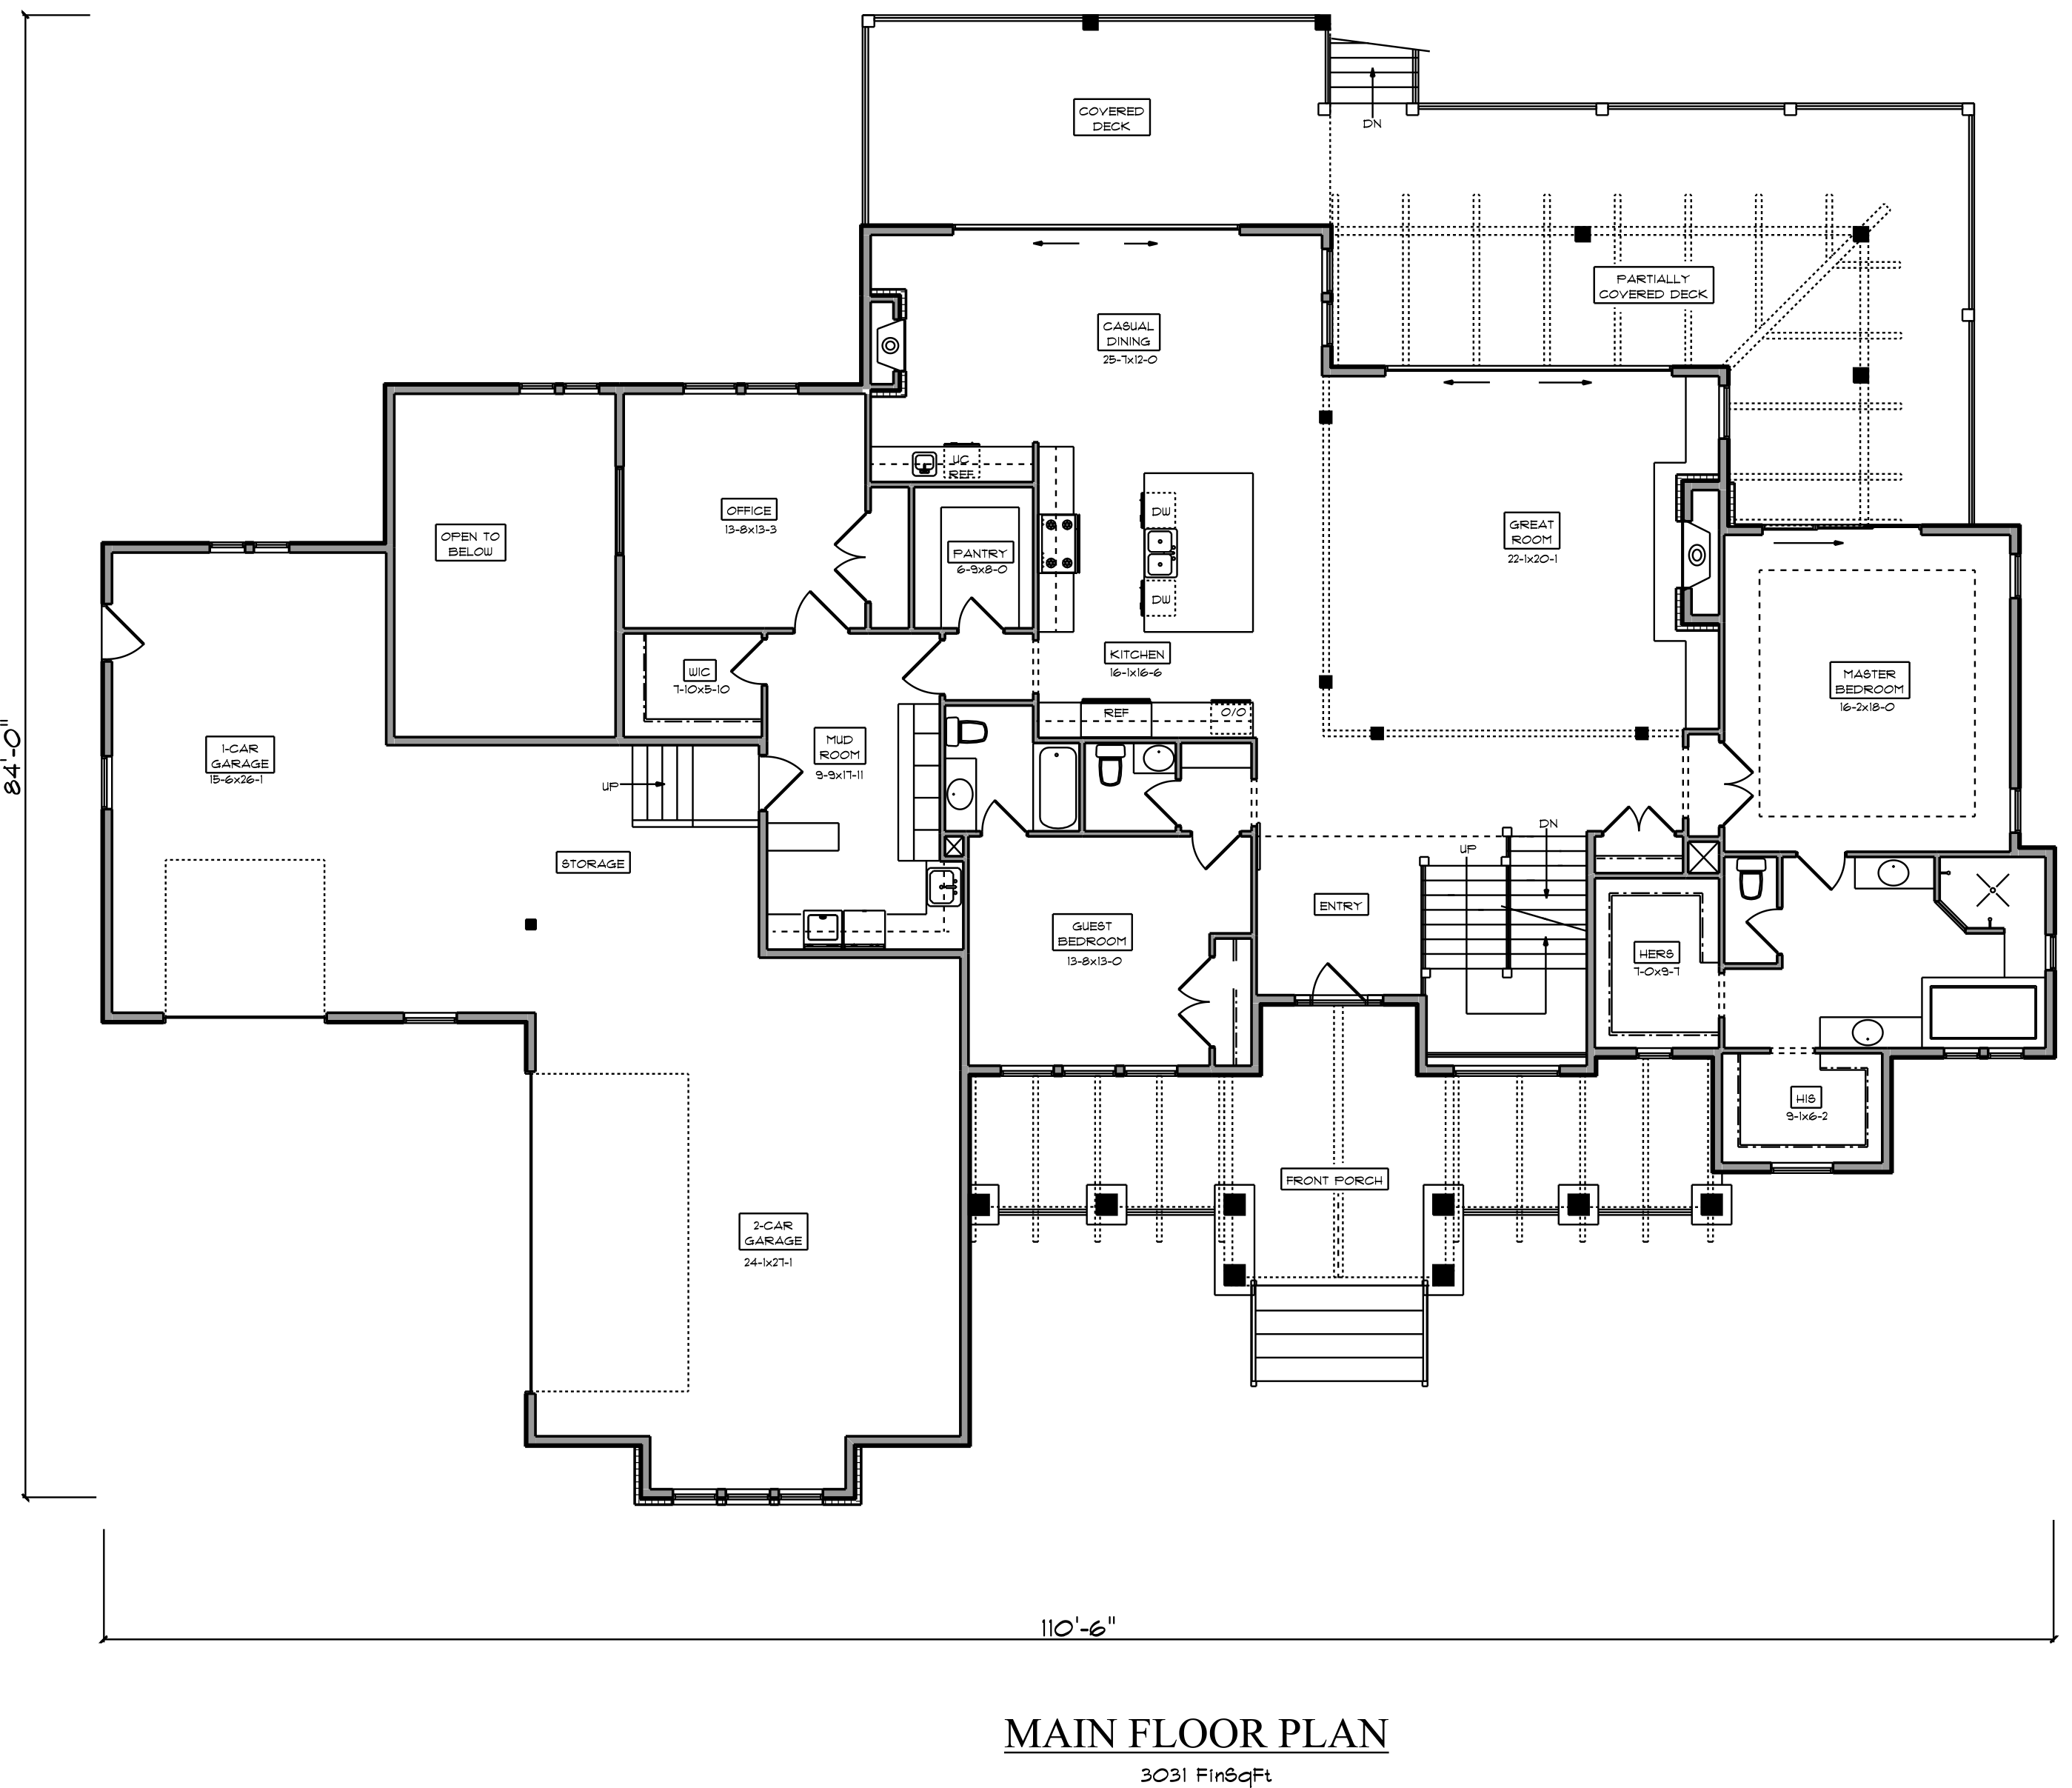 p1-the-millsboro-rd-main-floor-r-c